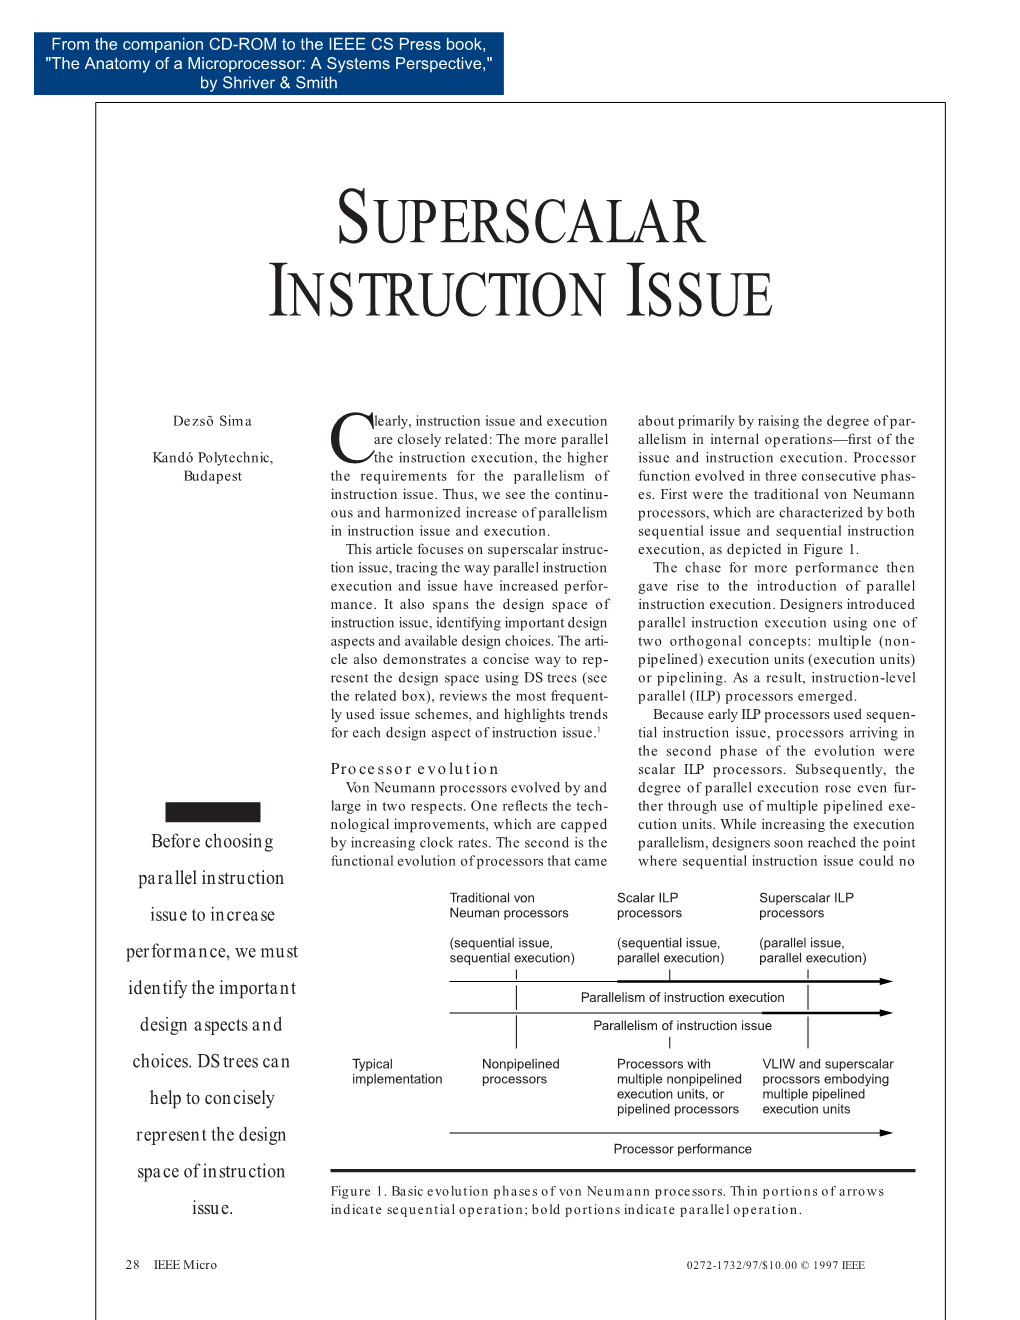 Superscalar Instruction Issue